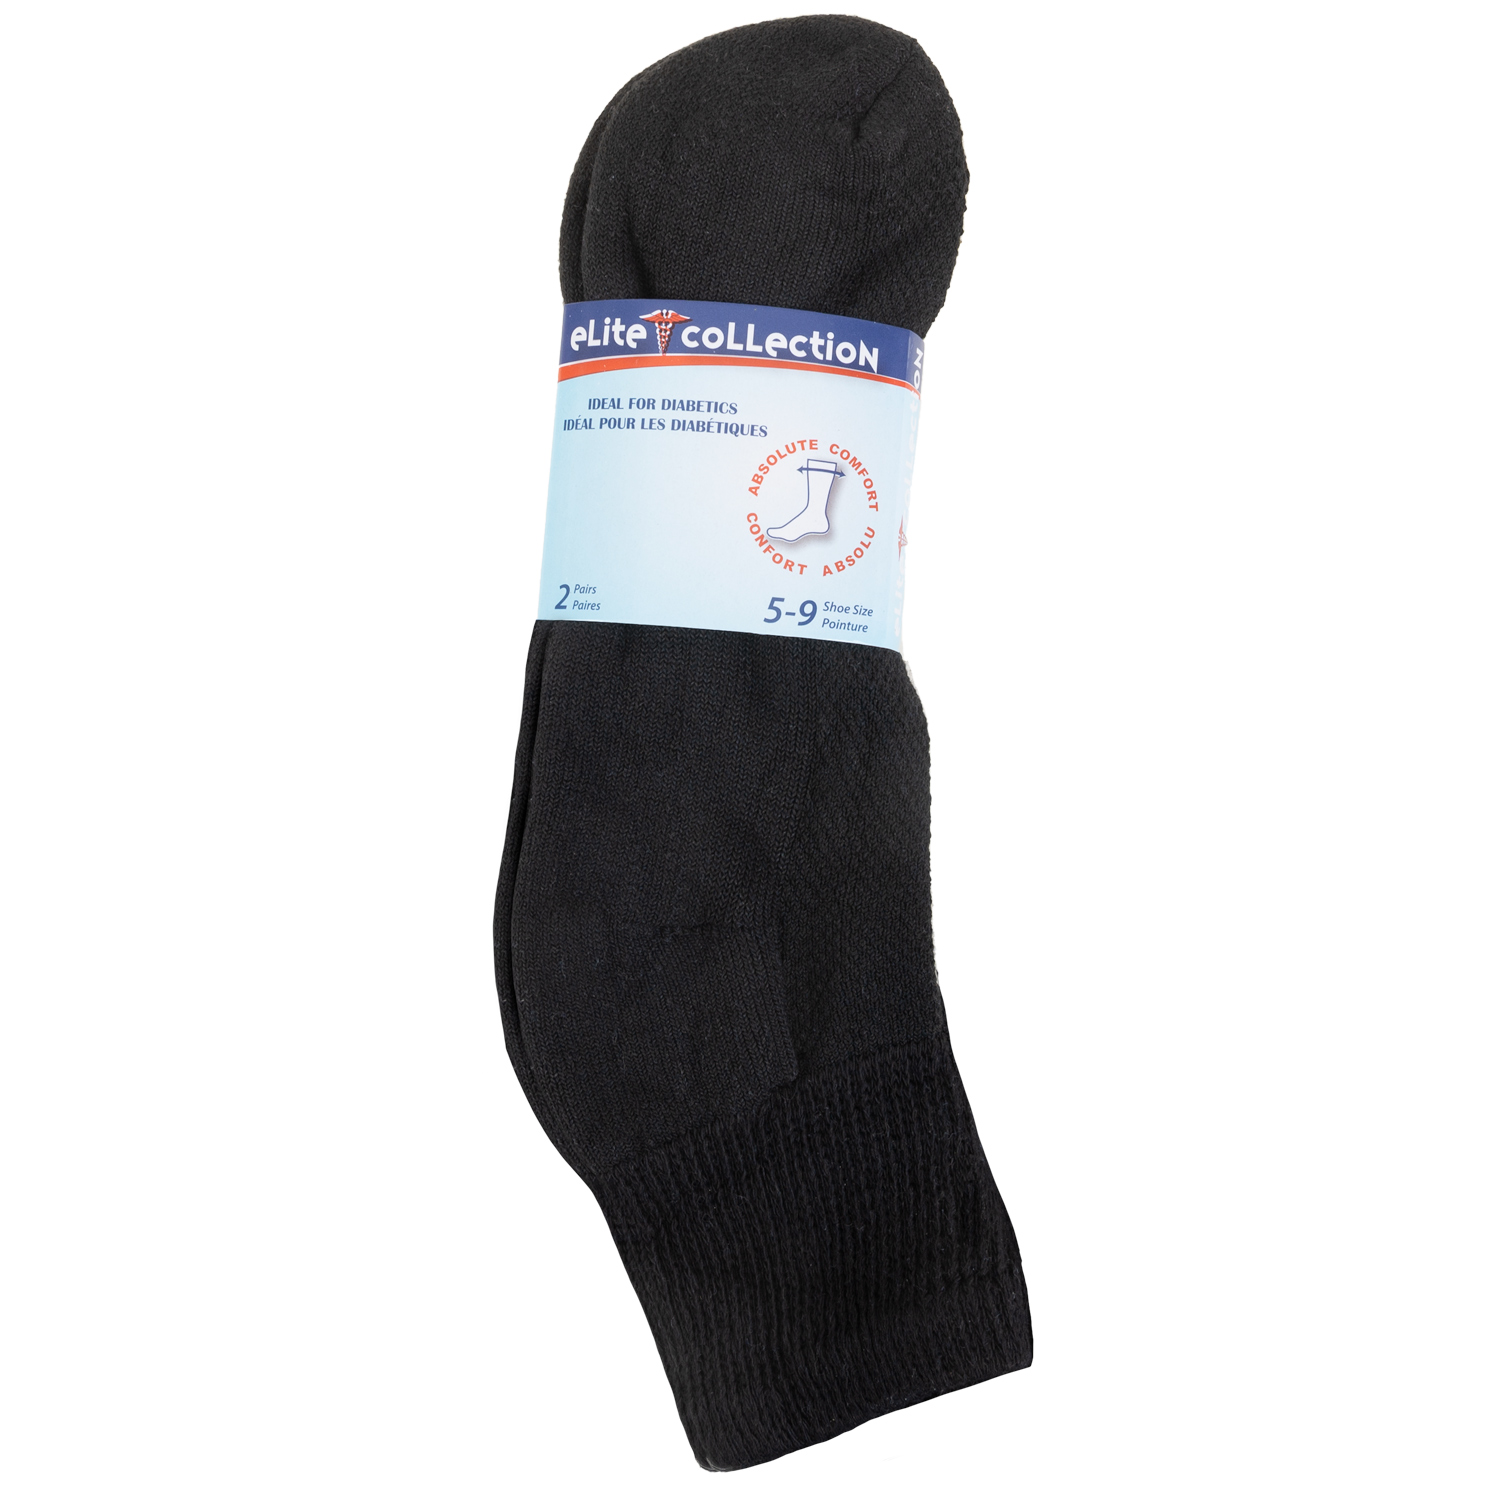 Elite Collection - Non-binding crew socks, 2 pairs